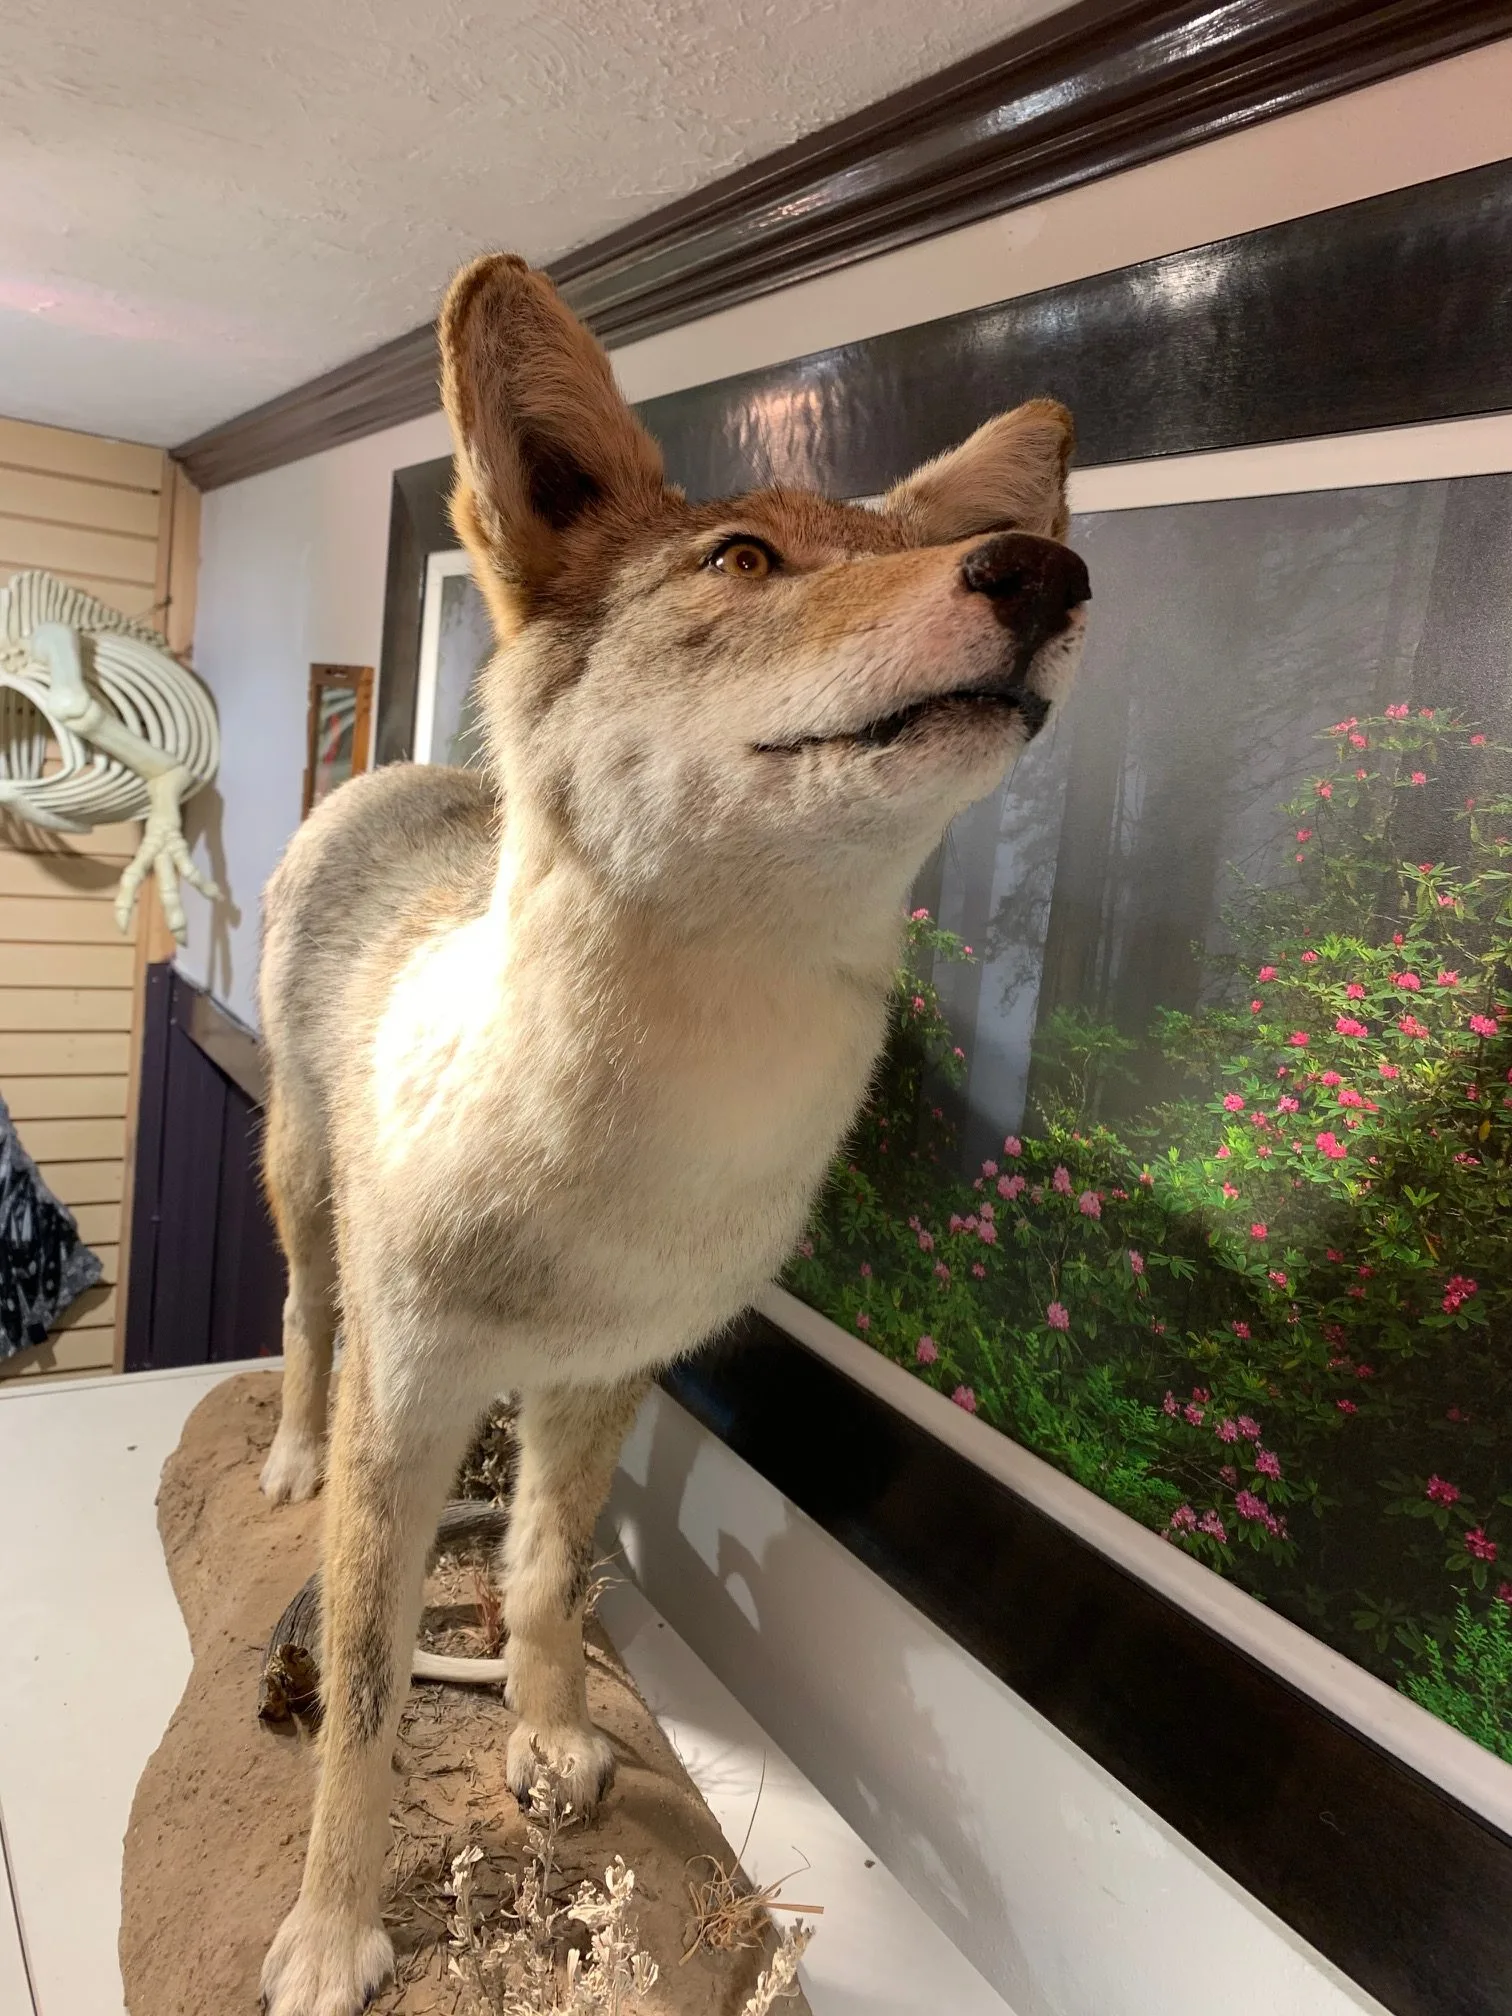 Coyote, world class Top Taxidermist Prehistoric Online